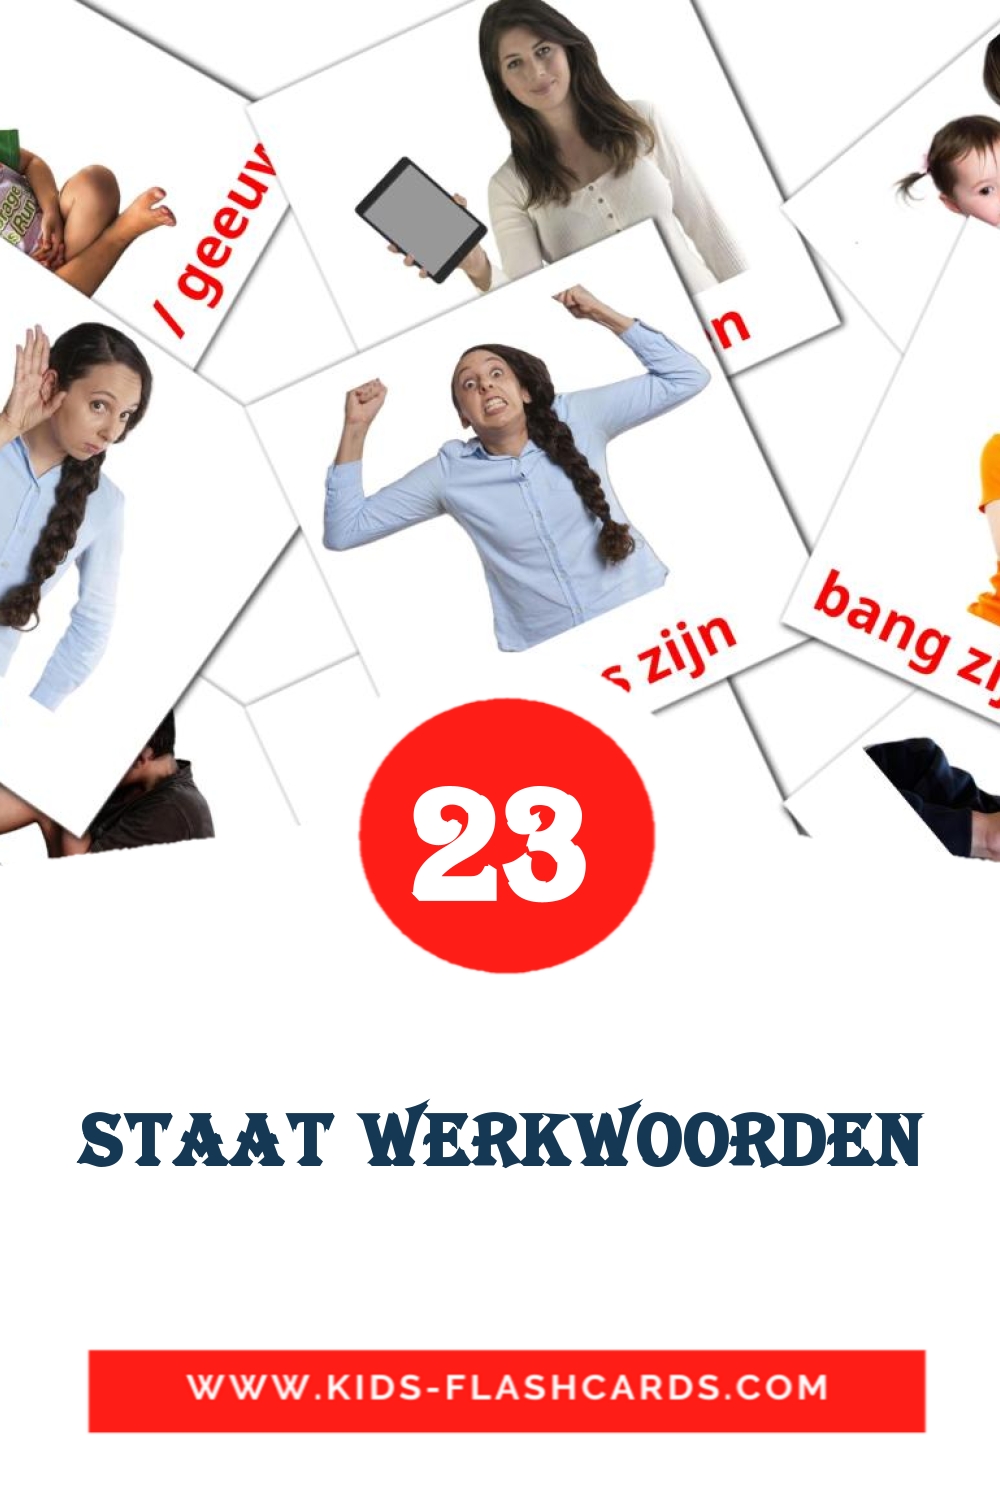 23 tarjetas didacticas de Staat werkwoorden para el jardín de infancia en holandés